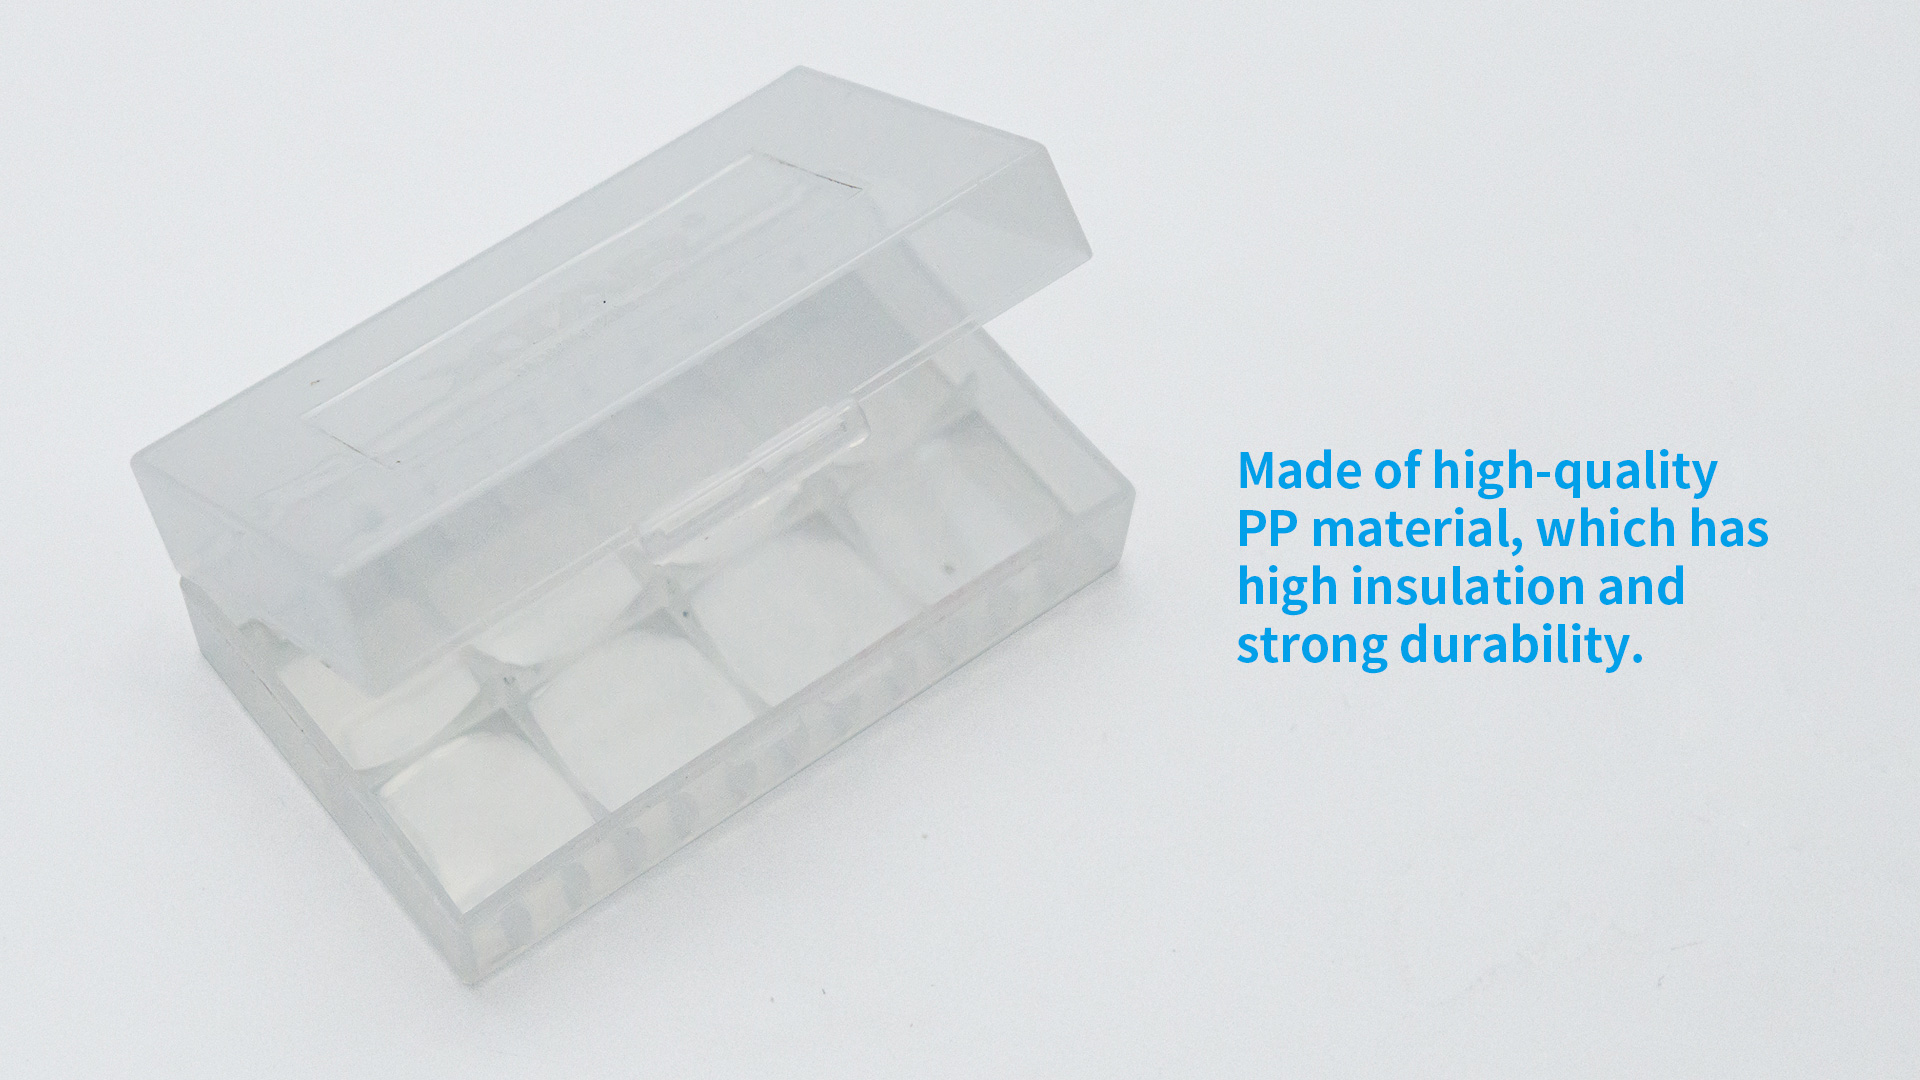 PP materials